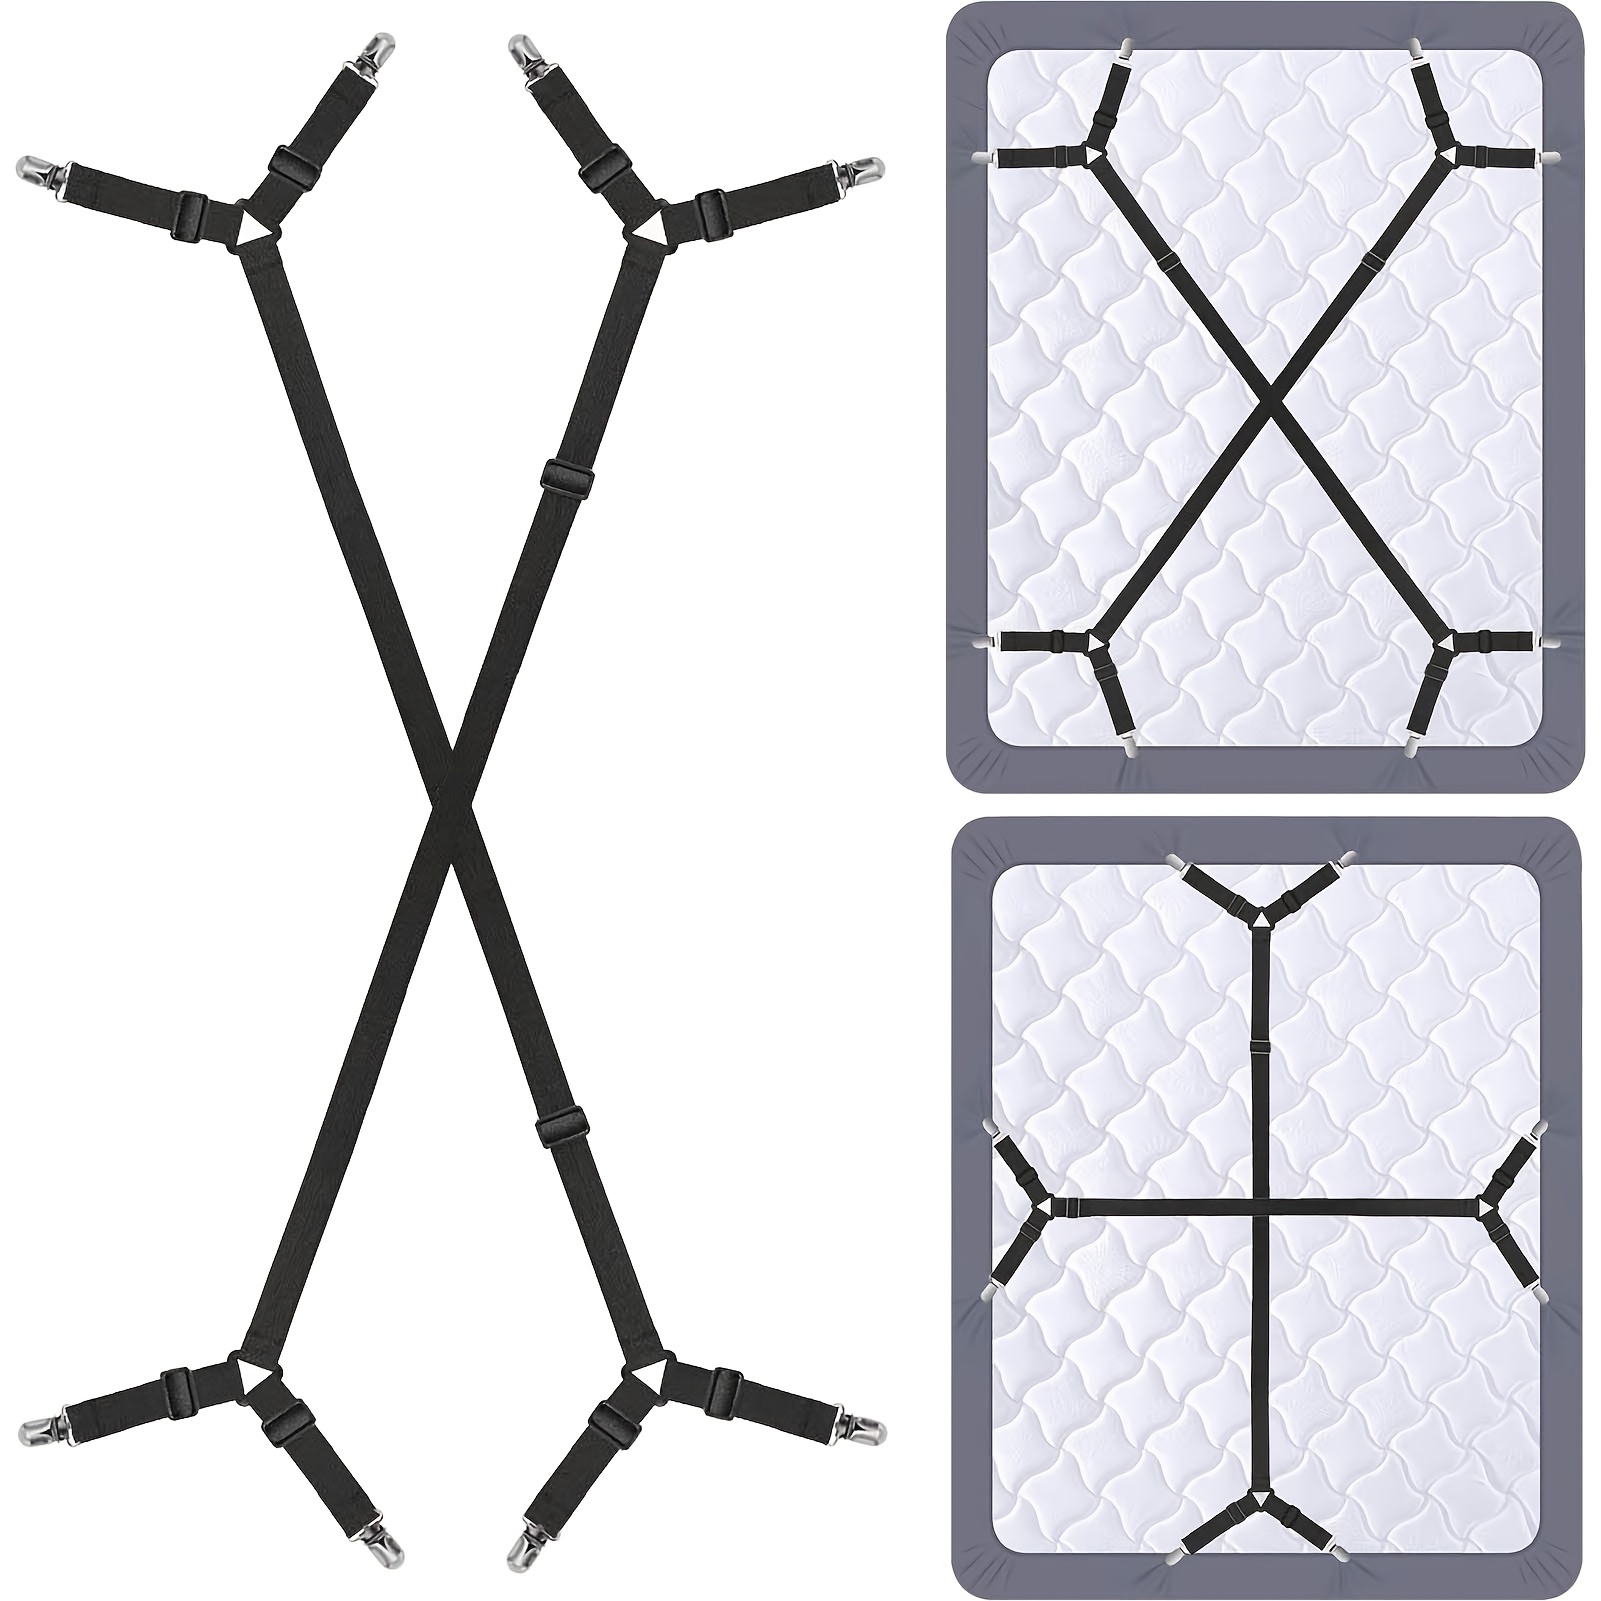 Bed Sheet Fasteners Adjustable Triangle Elastic Suspenders